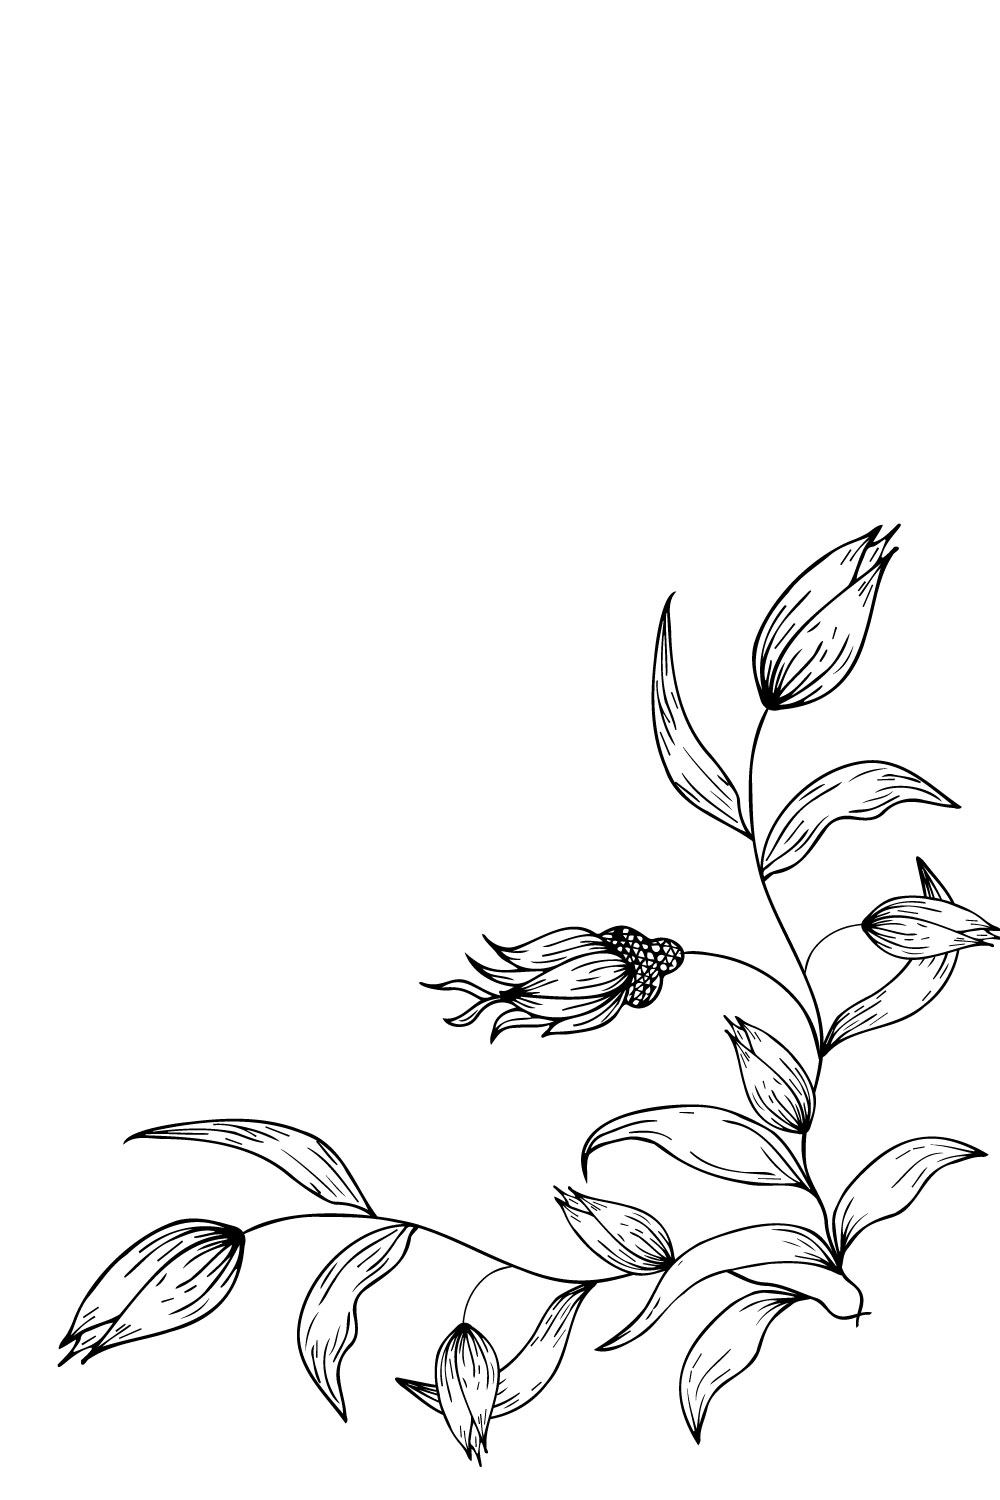 Hand Drawing Flower Composition Arrangement pinterest image.